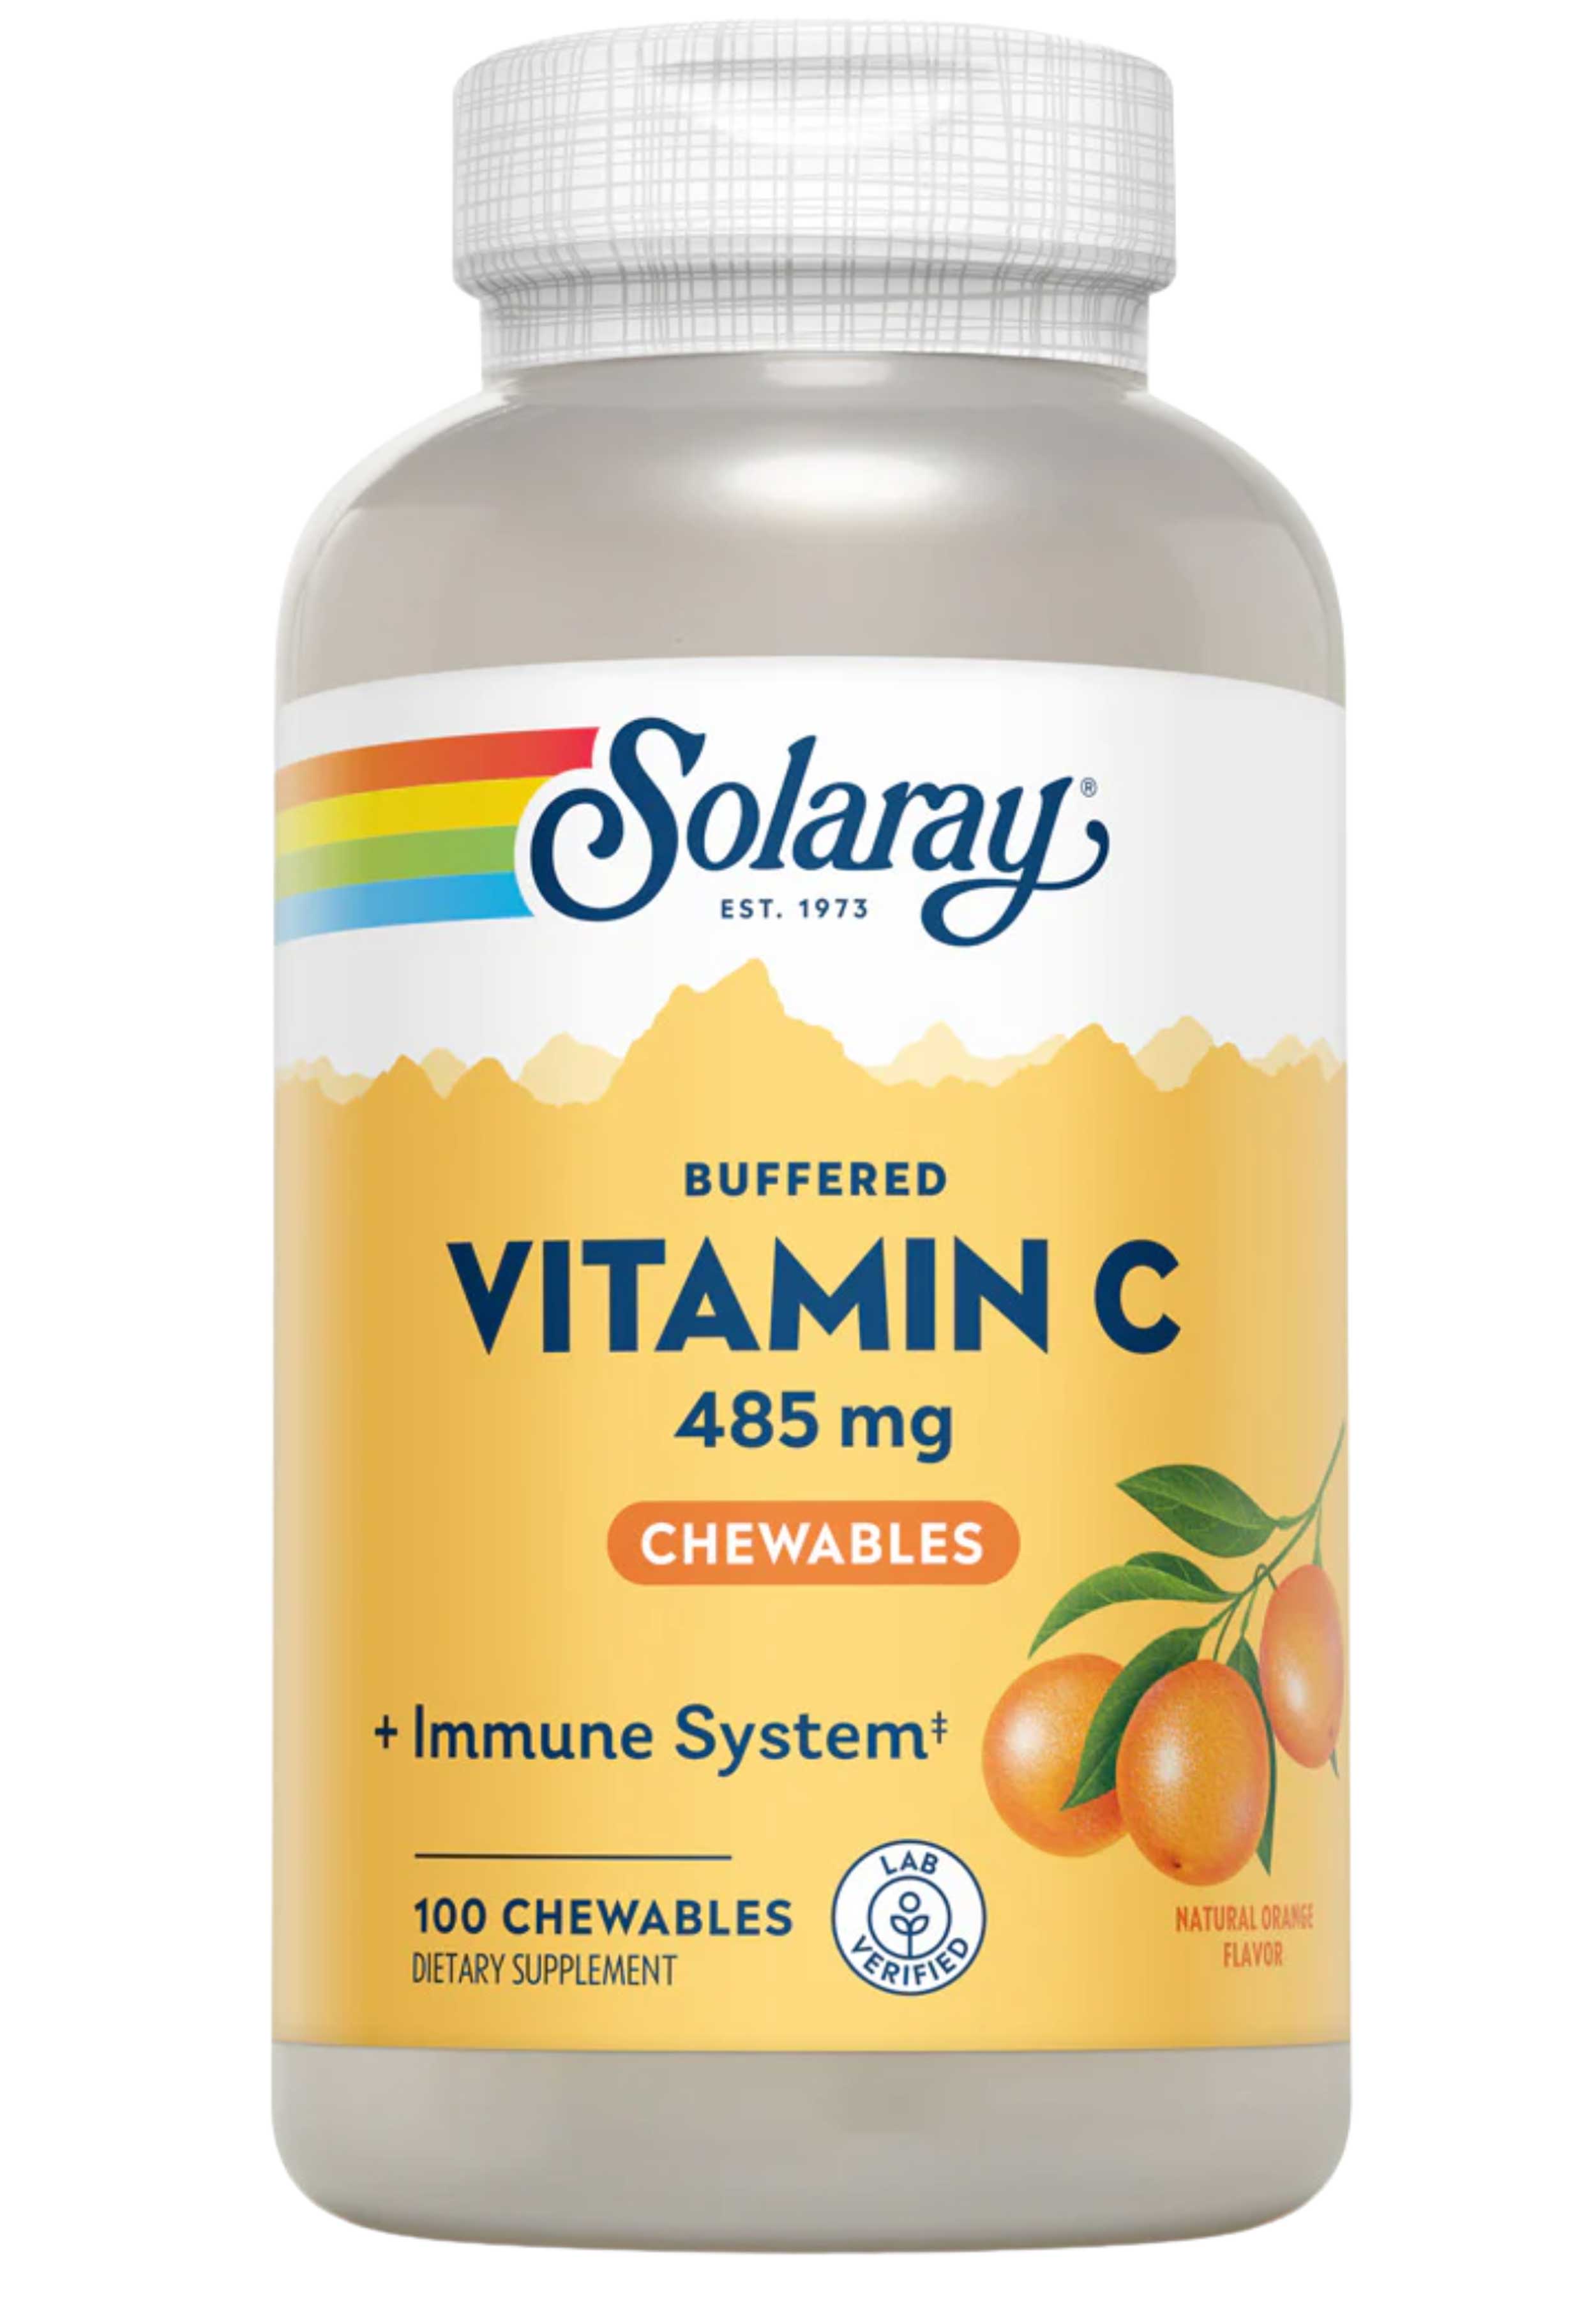 Solaray Vitamin C Buffered Chewables